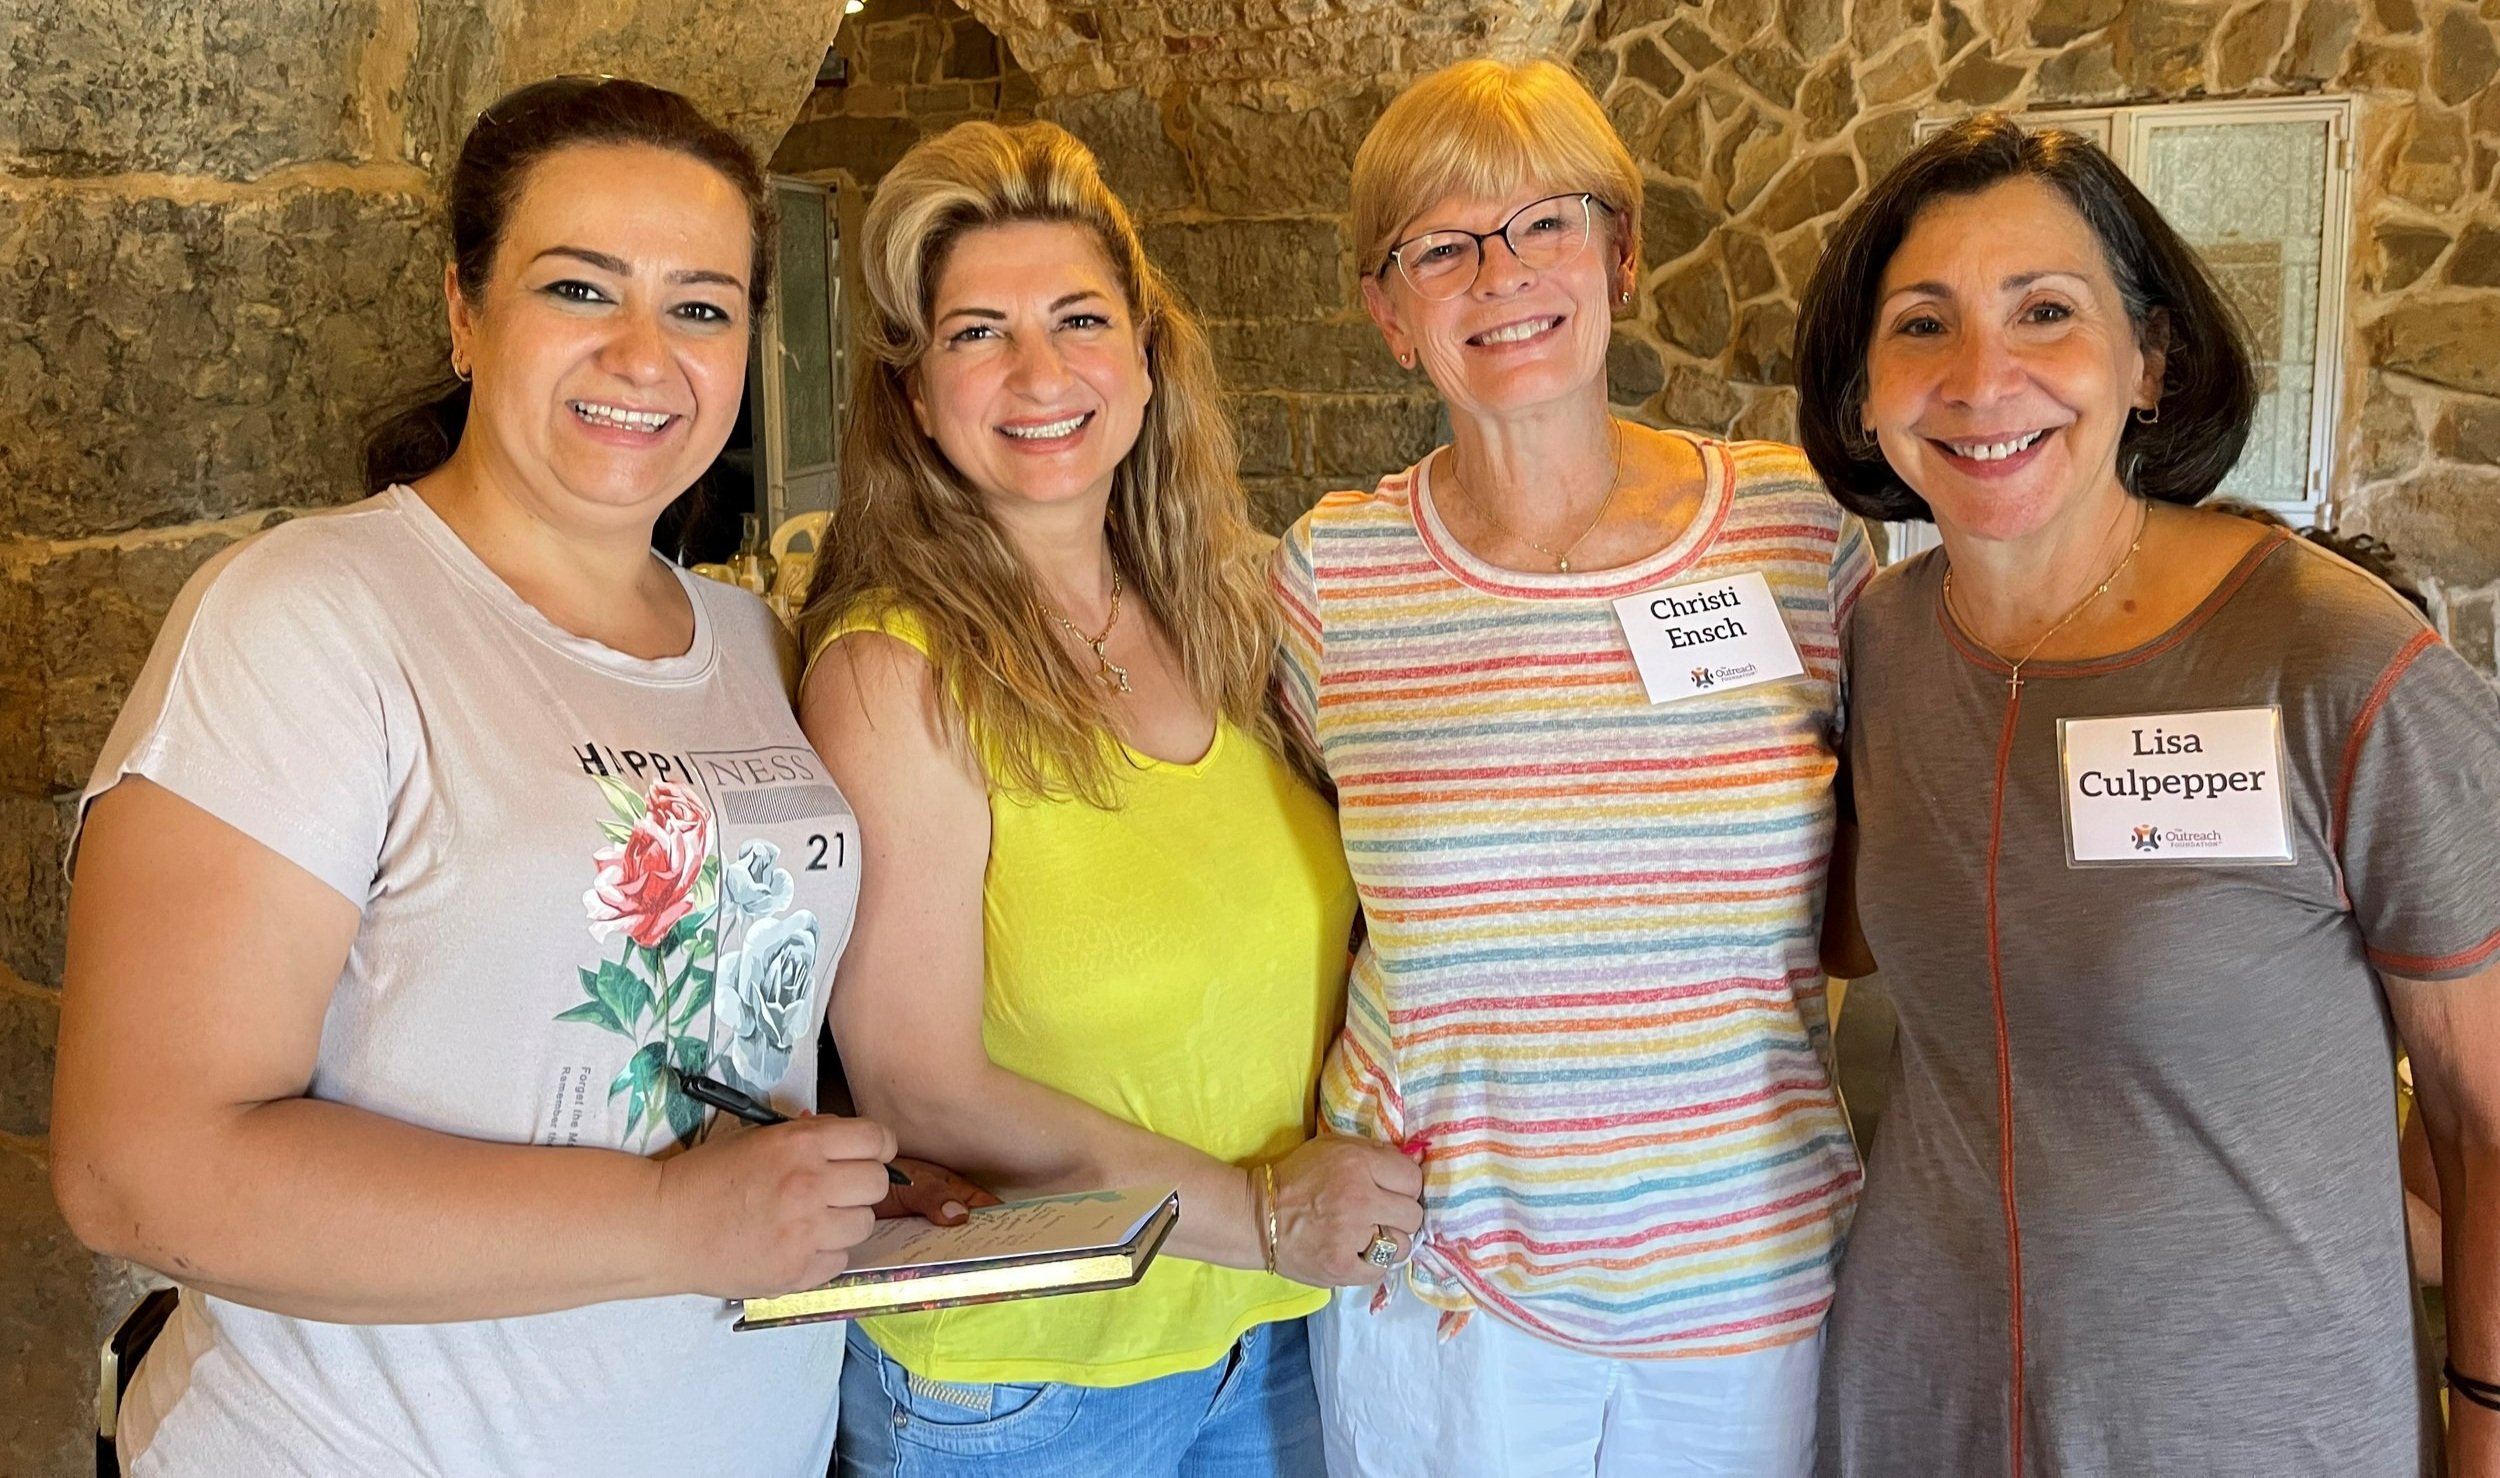   Christi Ensch and Lisa Culpepper make new friends from Aleppo  